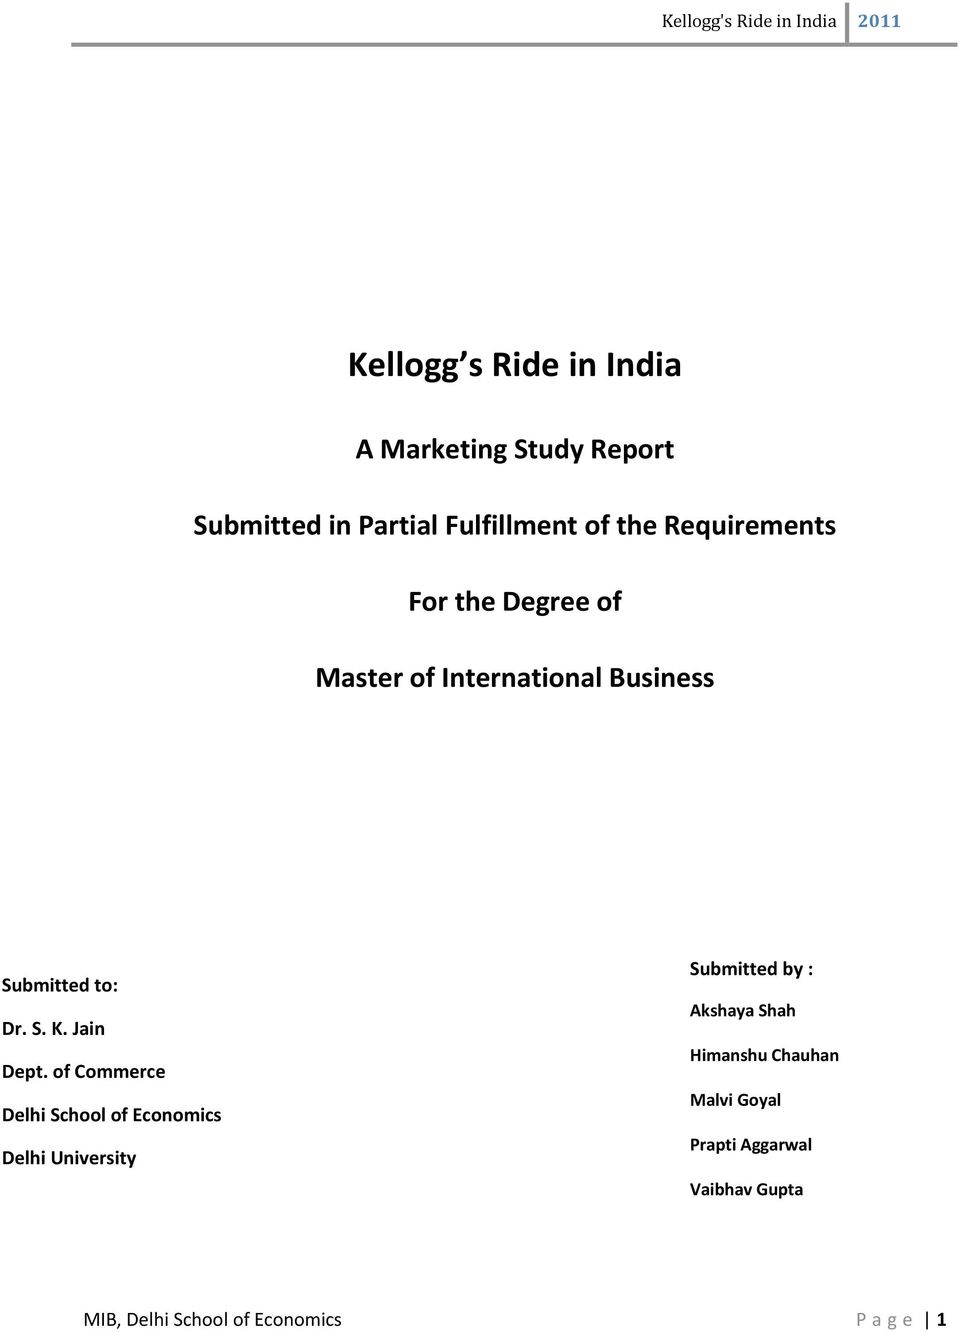 Kelloggs in india marketreport